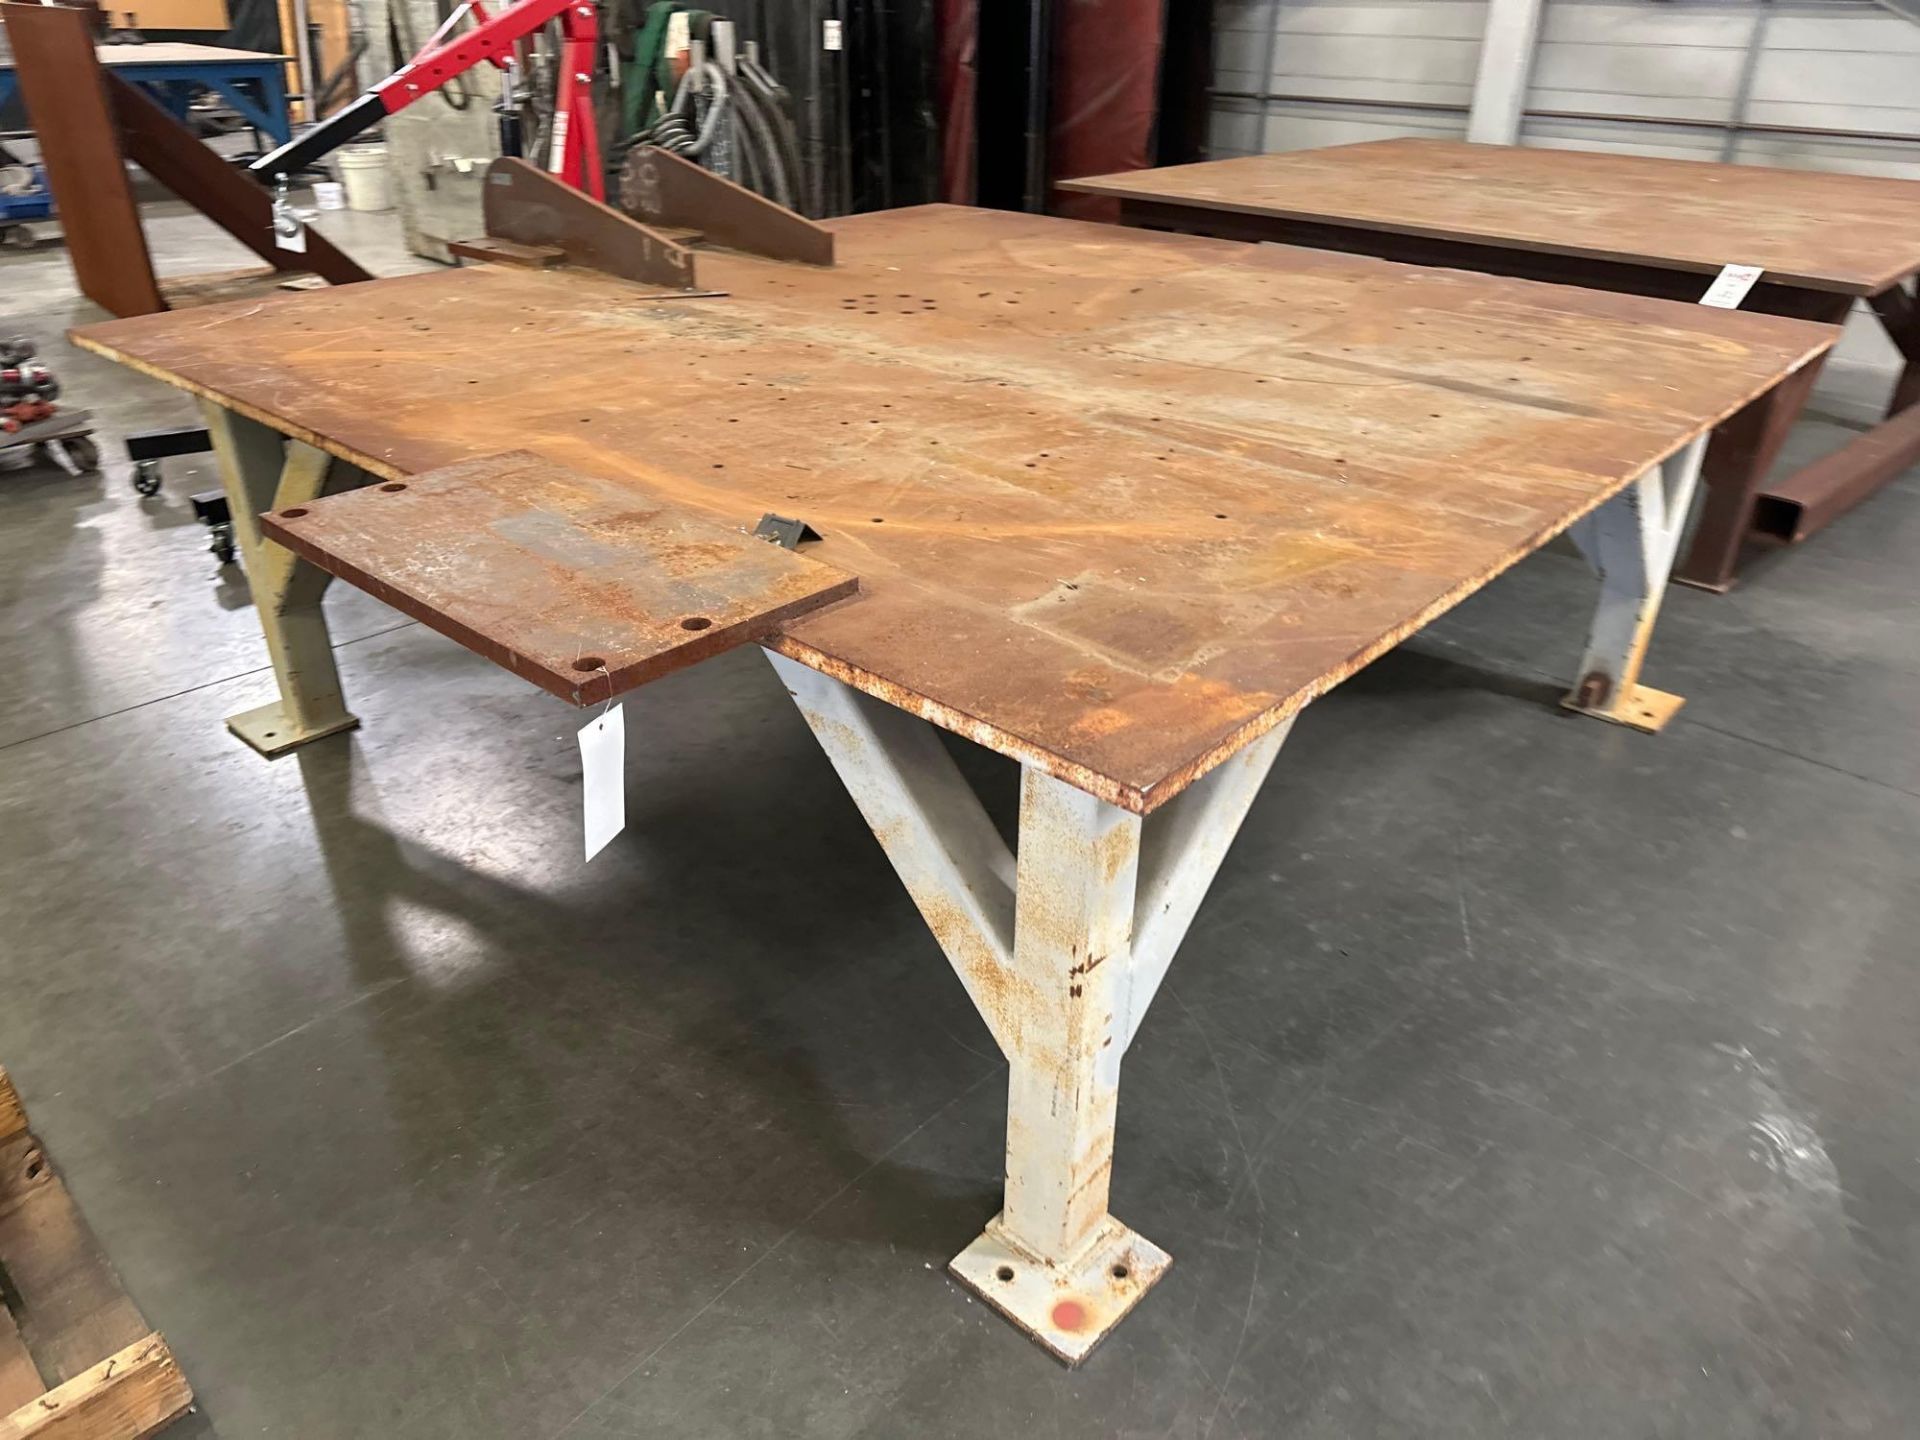 96”L x 96”W x 34”H Steel Welding Table - Image 3 of 5